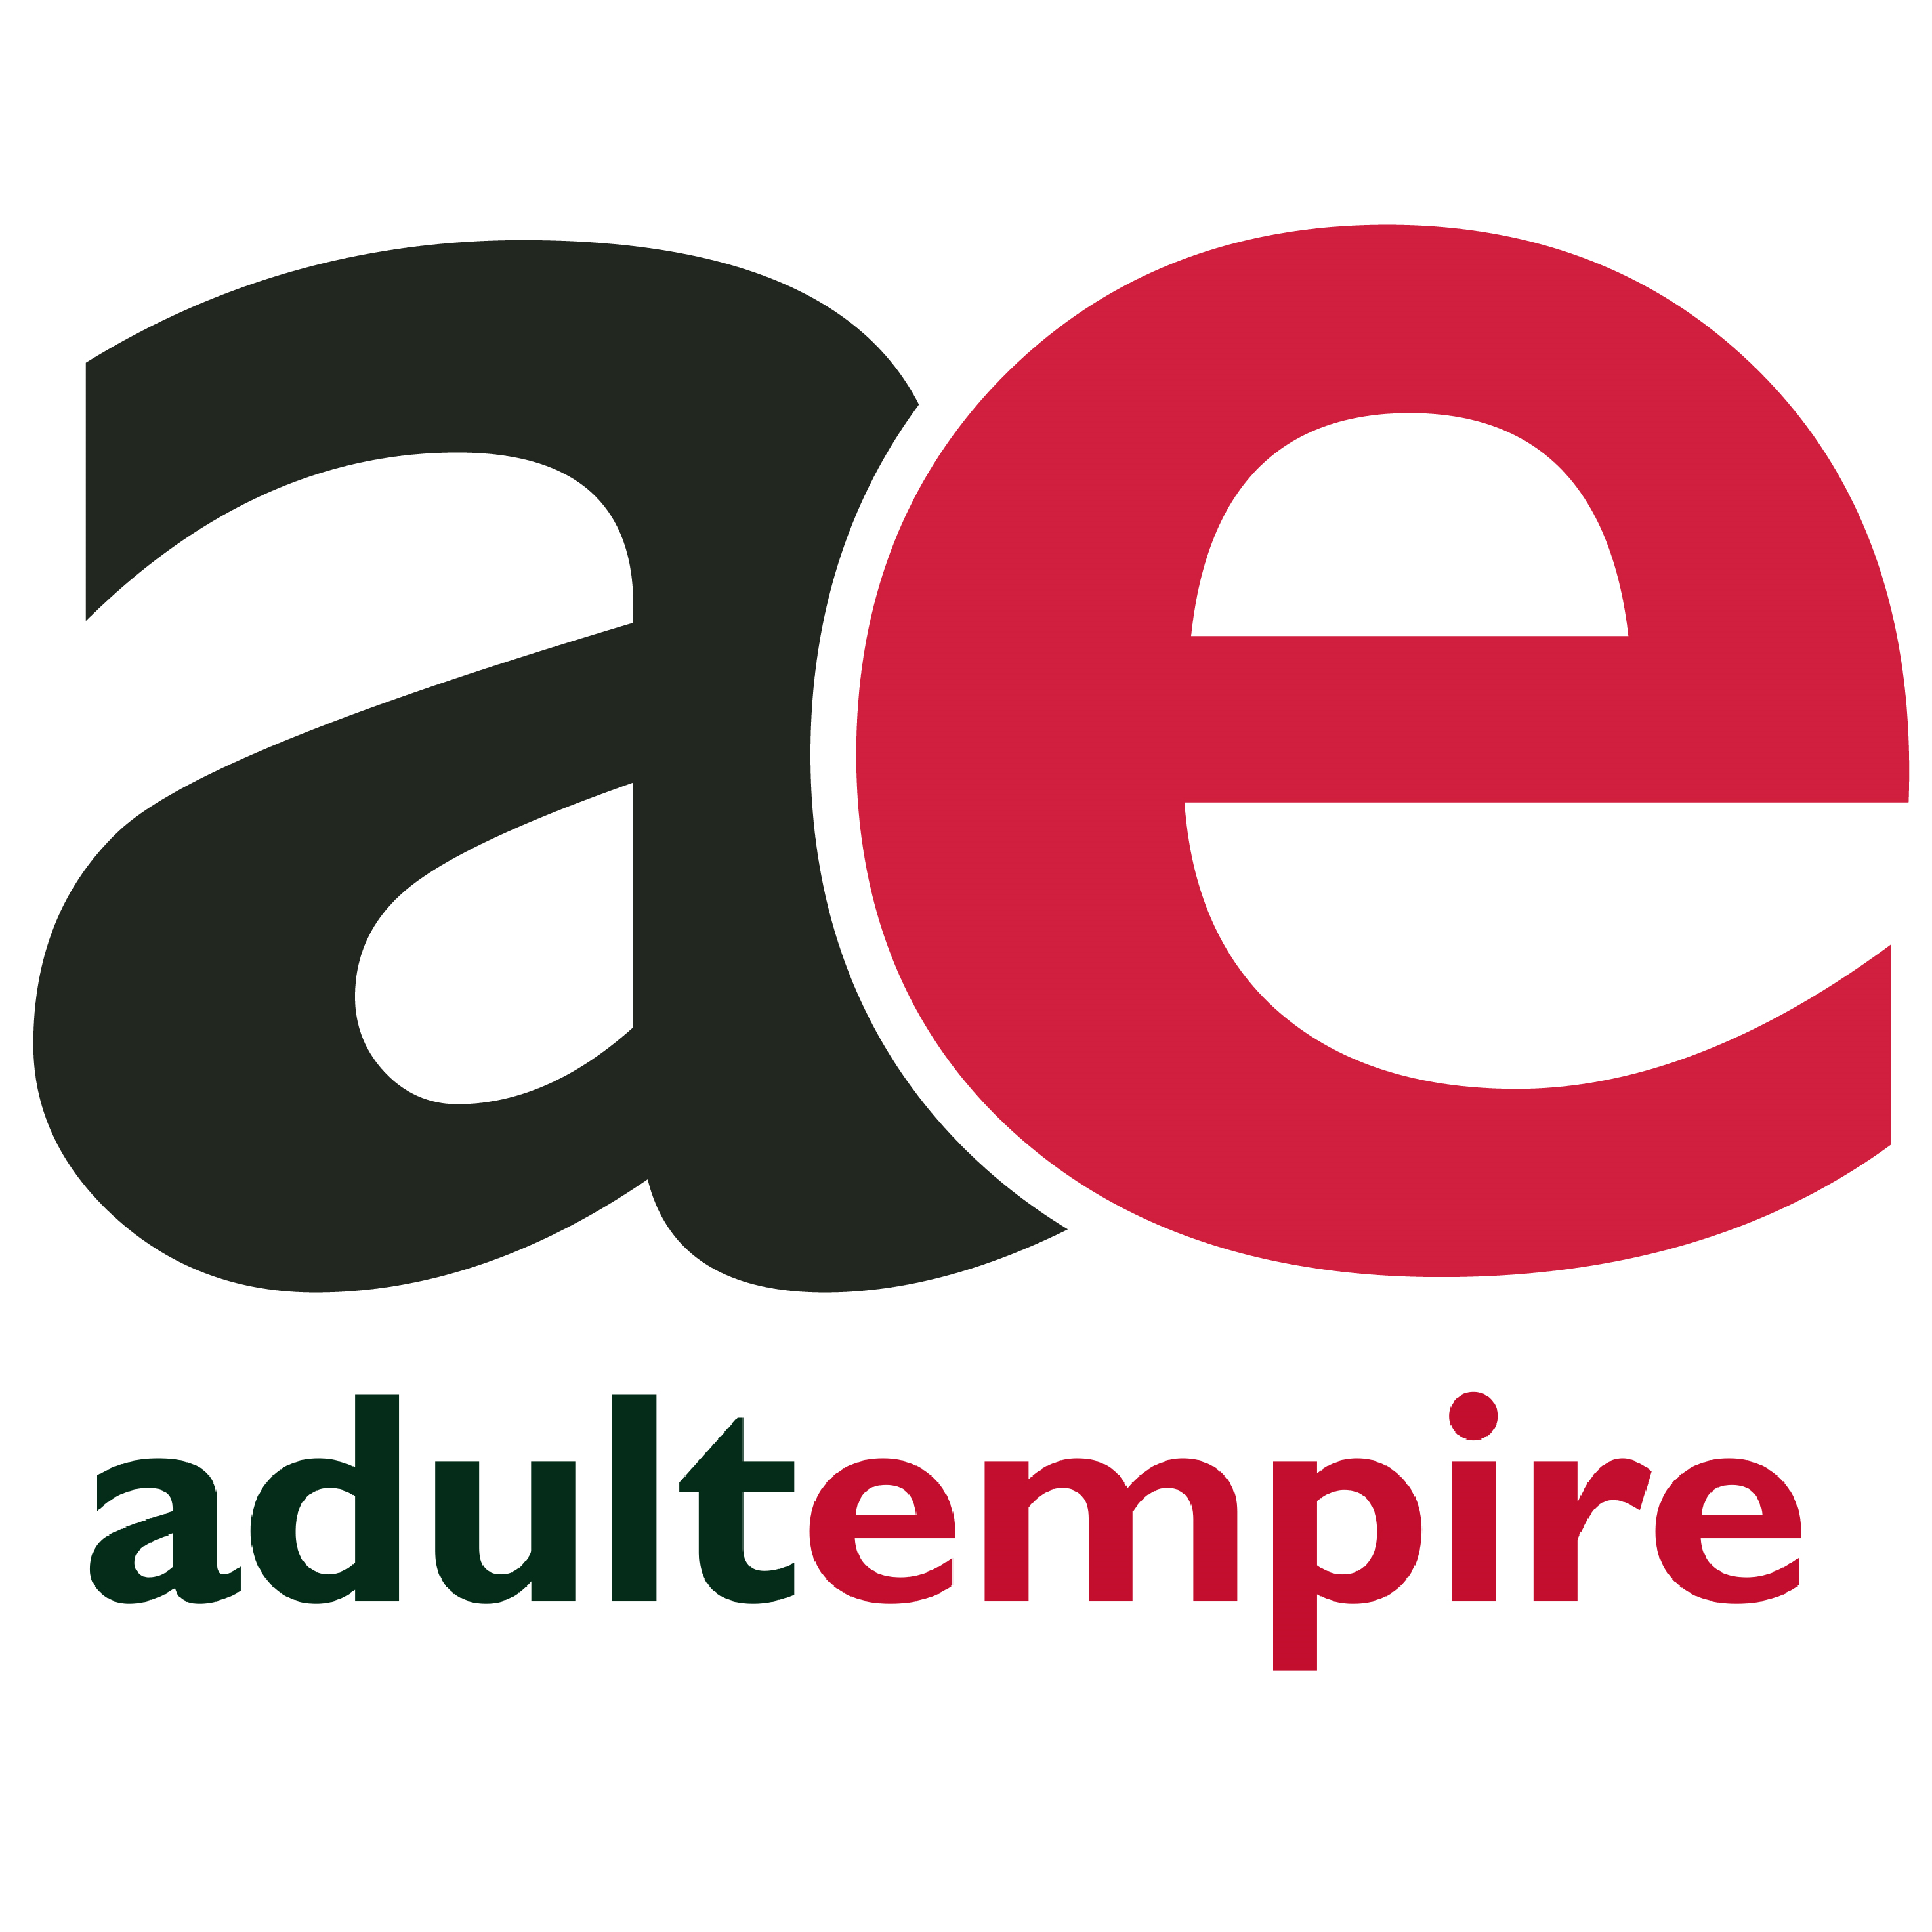 Adult Empire Cash